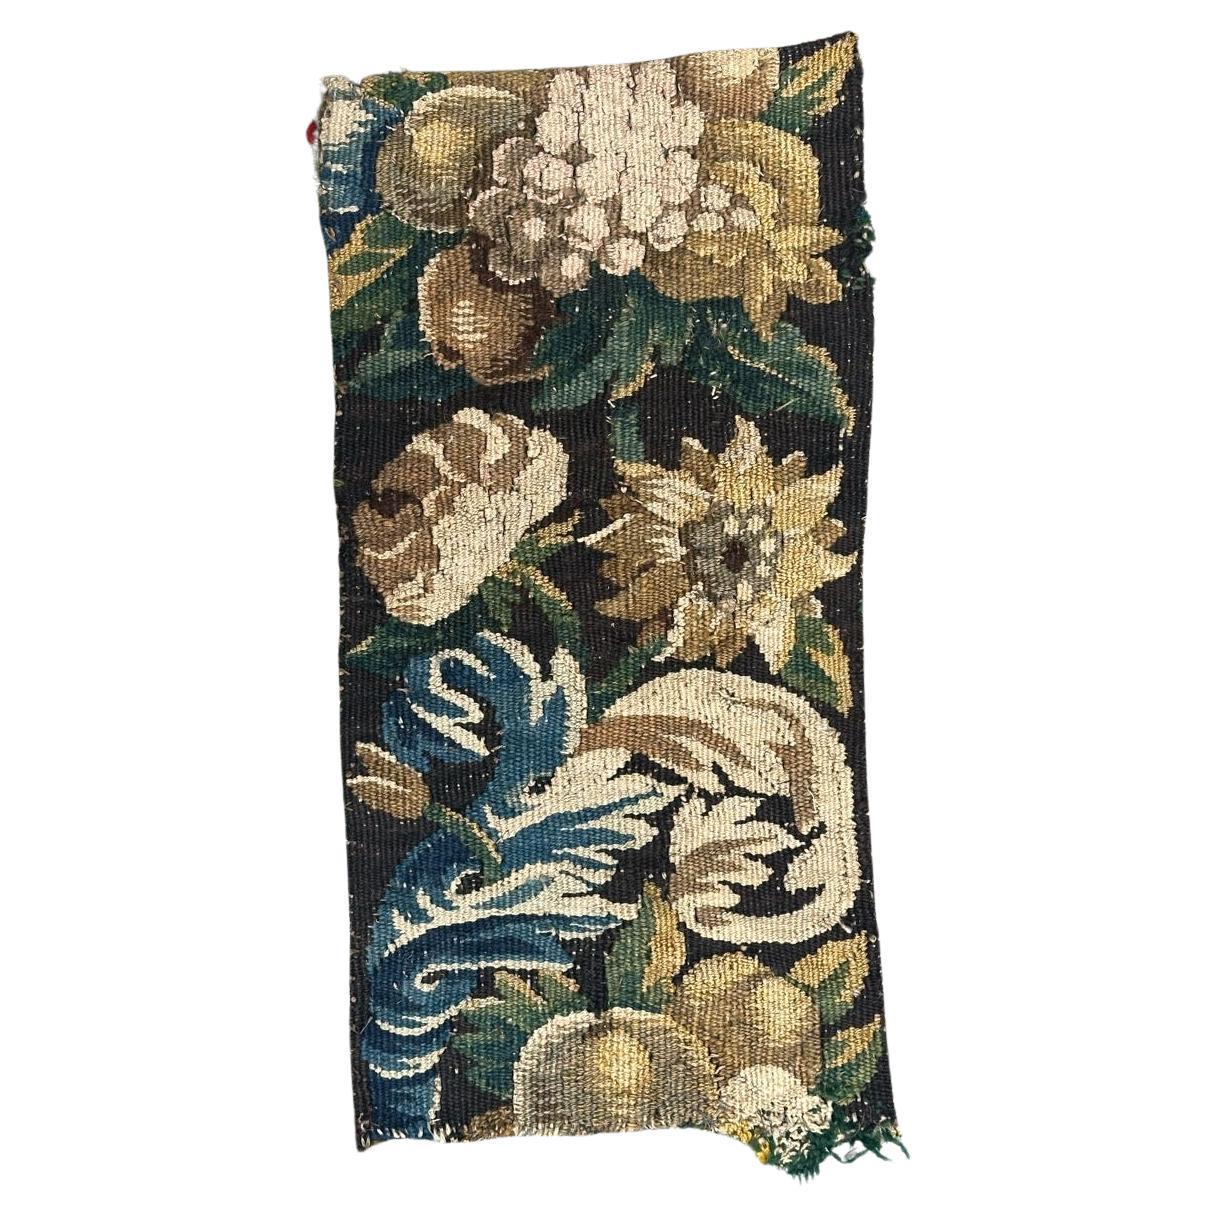 Bonito fragmento antiguo de tapiz de Aubusson francés del siglo XVIII 